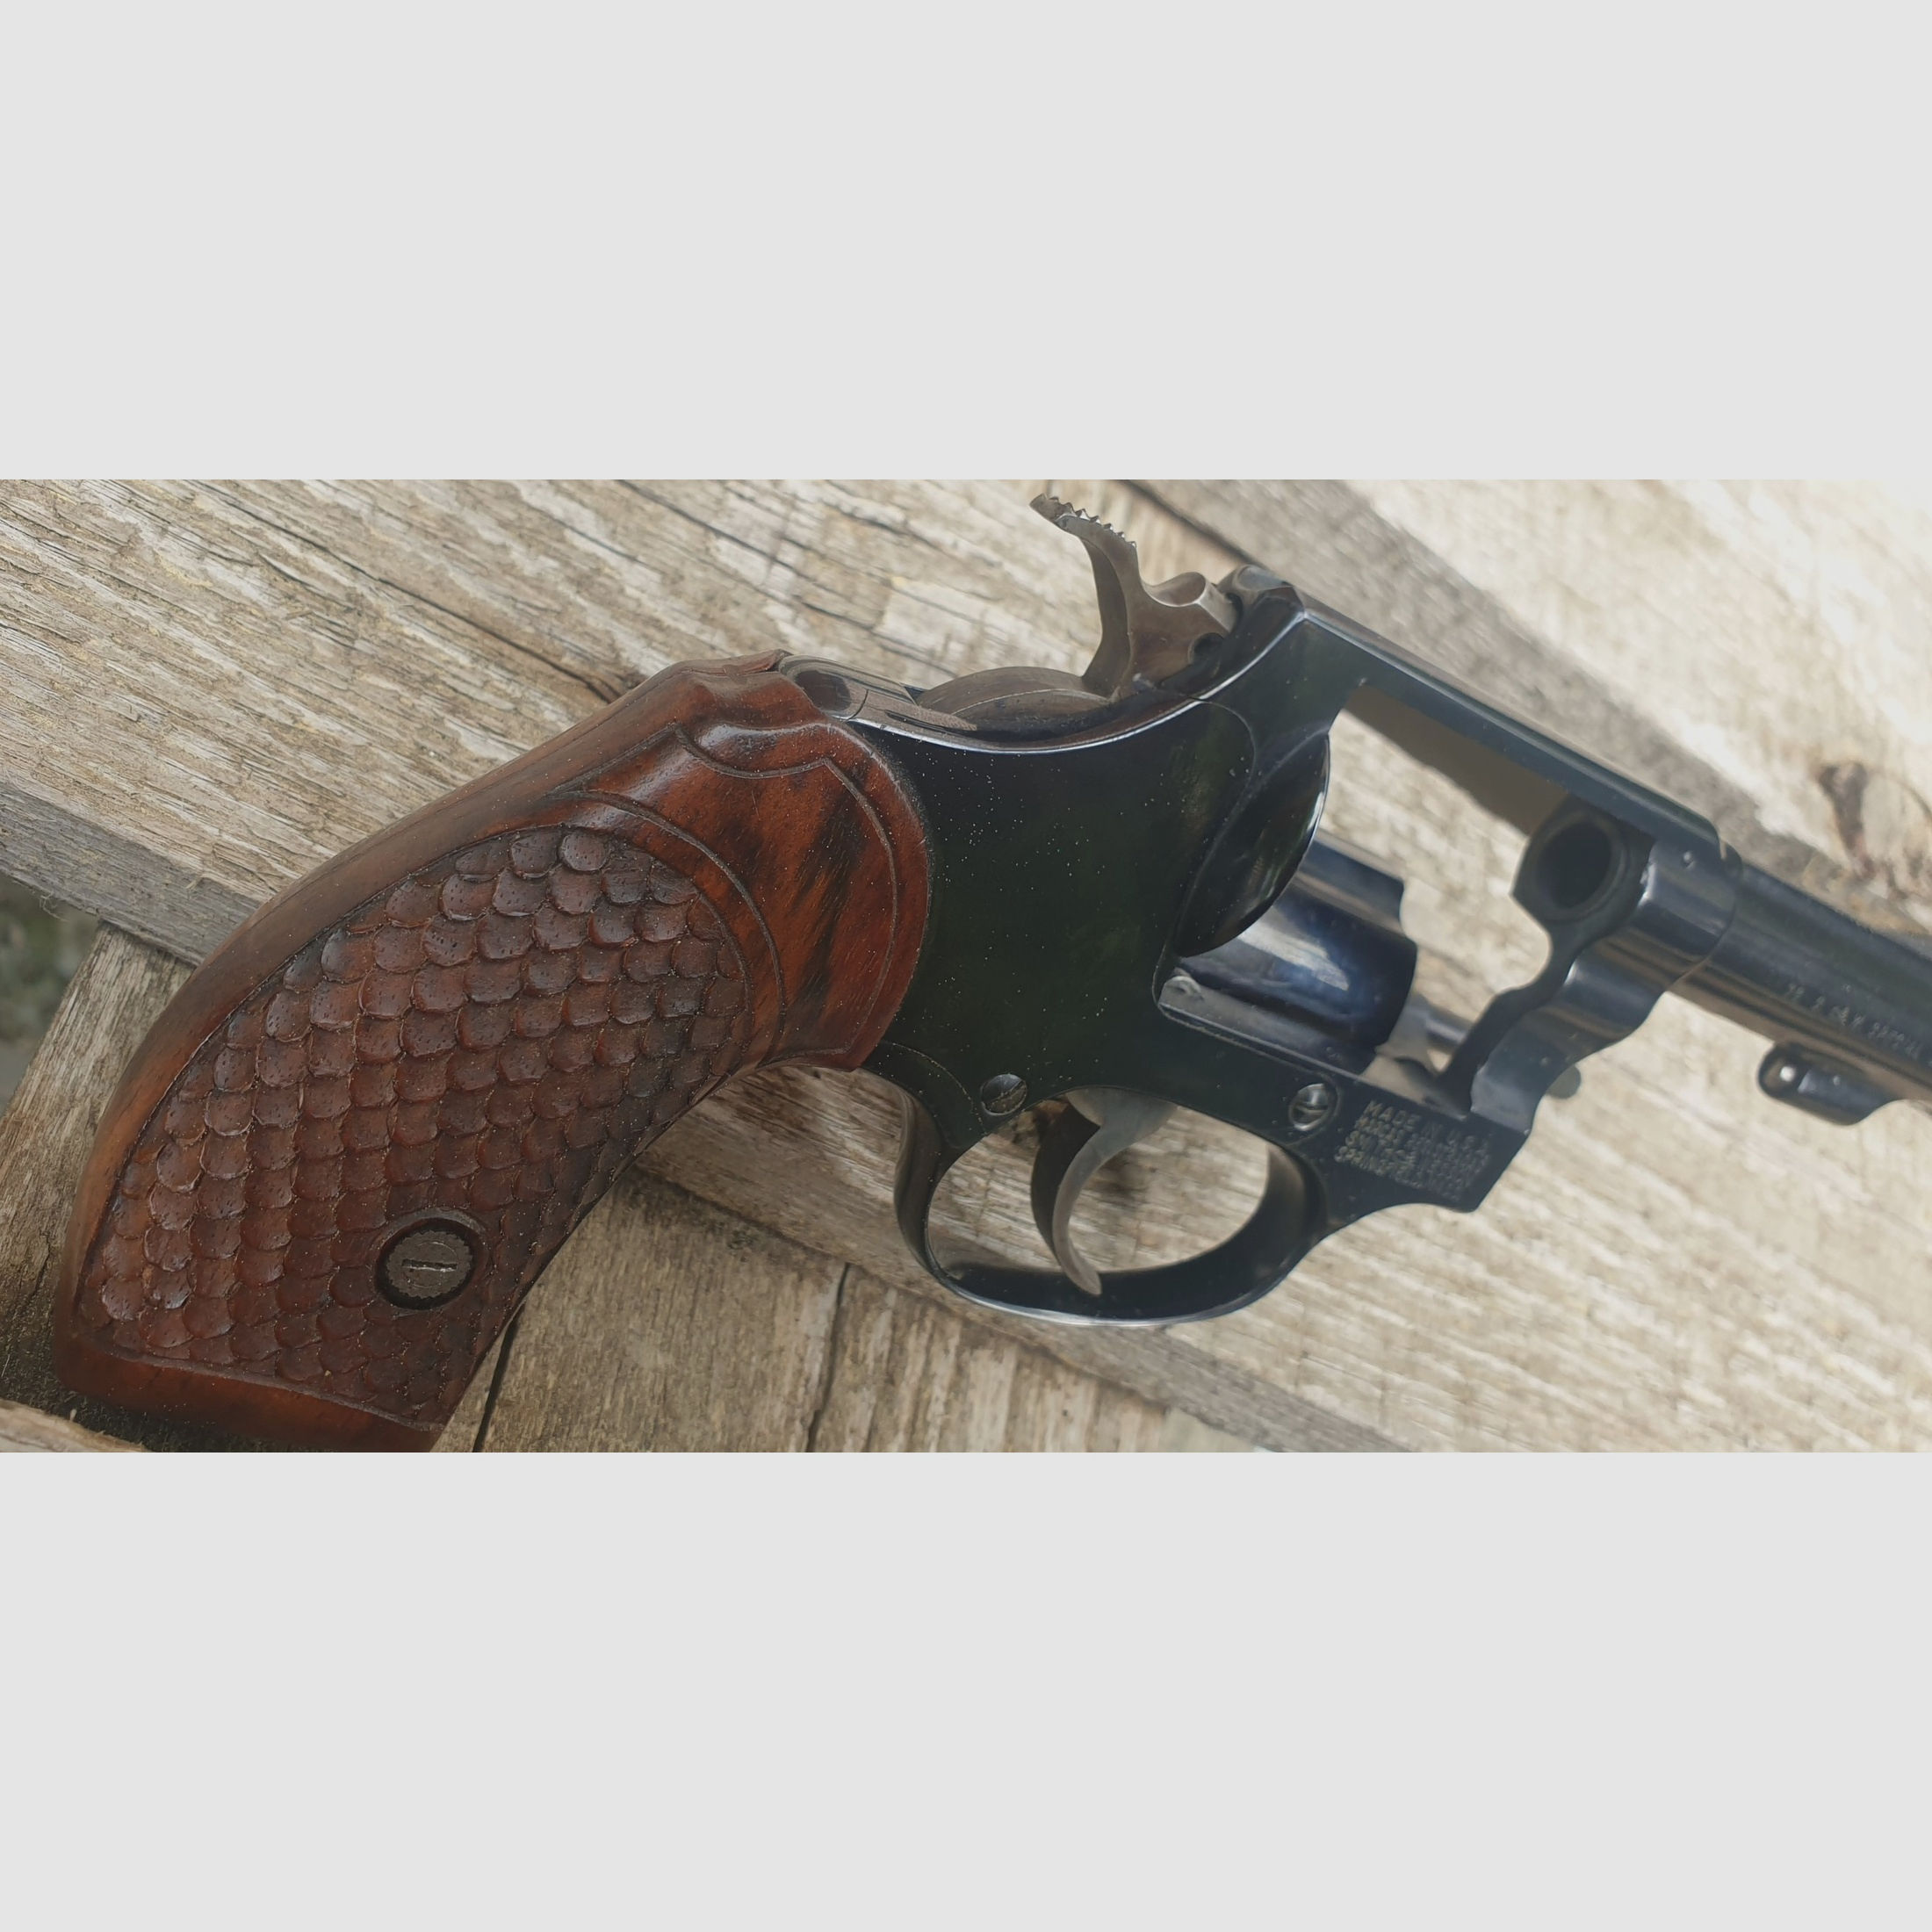 Revolver, Smith&Wesson, Mod 36,  Kal..38Spec. 2,5Zoll / Lauf, Griff mit Schuppen-FH